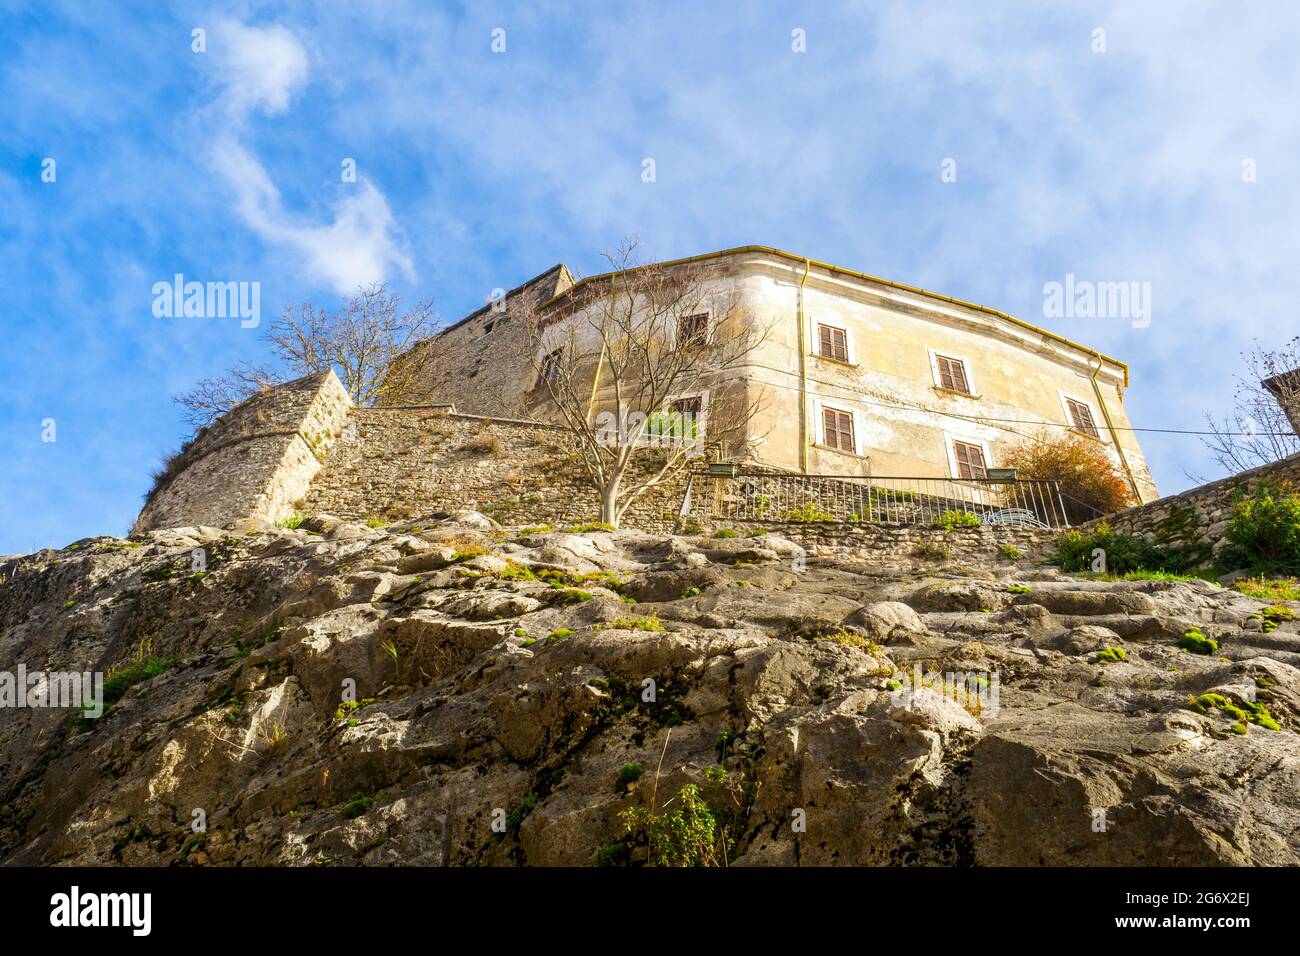 The Little town of Castel di Tora - Rieti, Italy Stock Photo